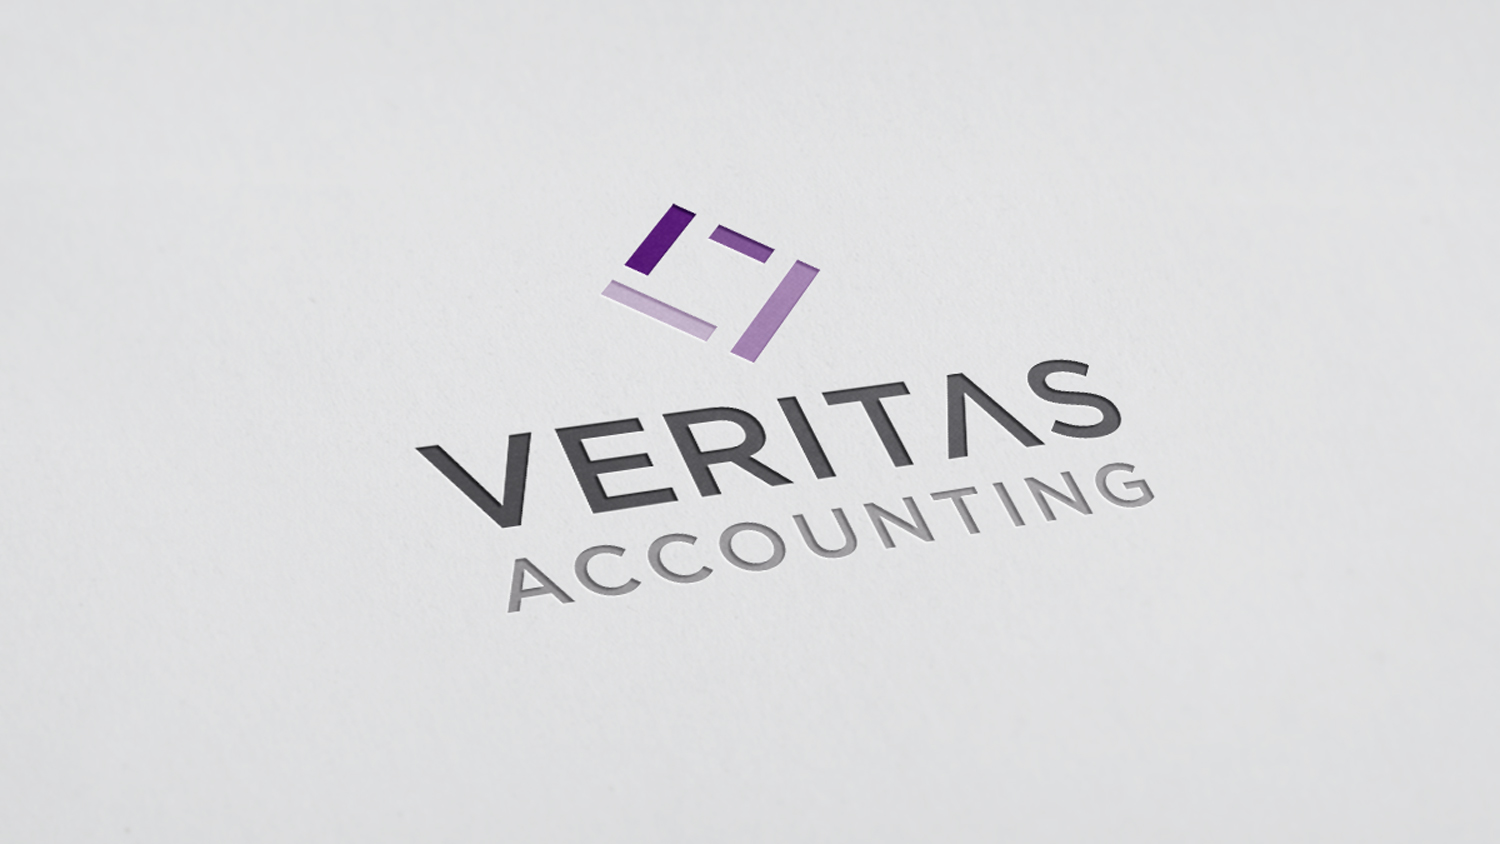 Vertias Accounting logo embossed on paper